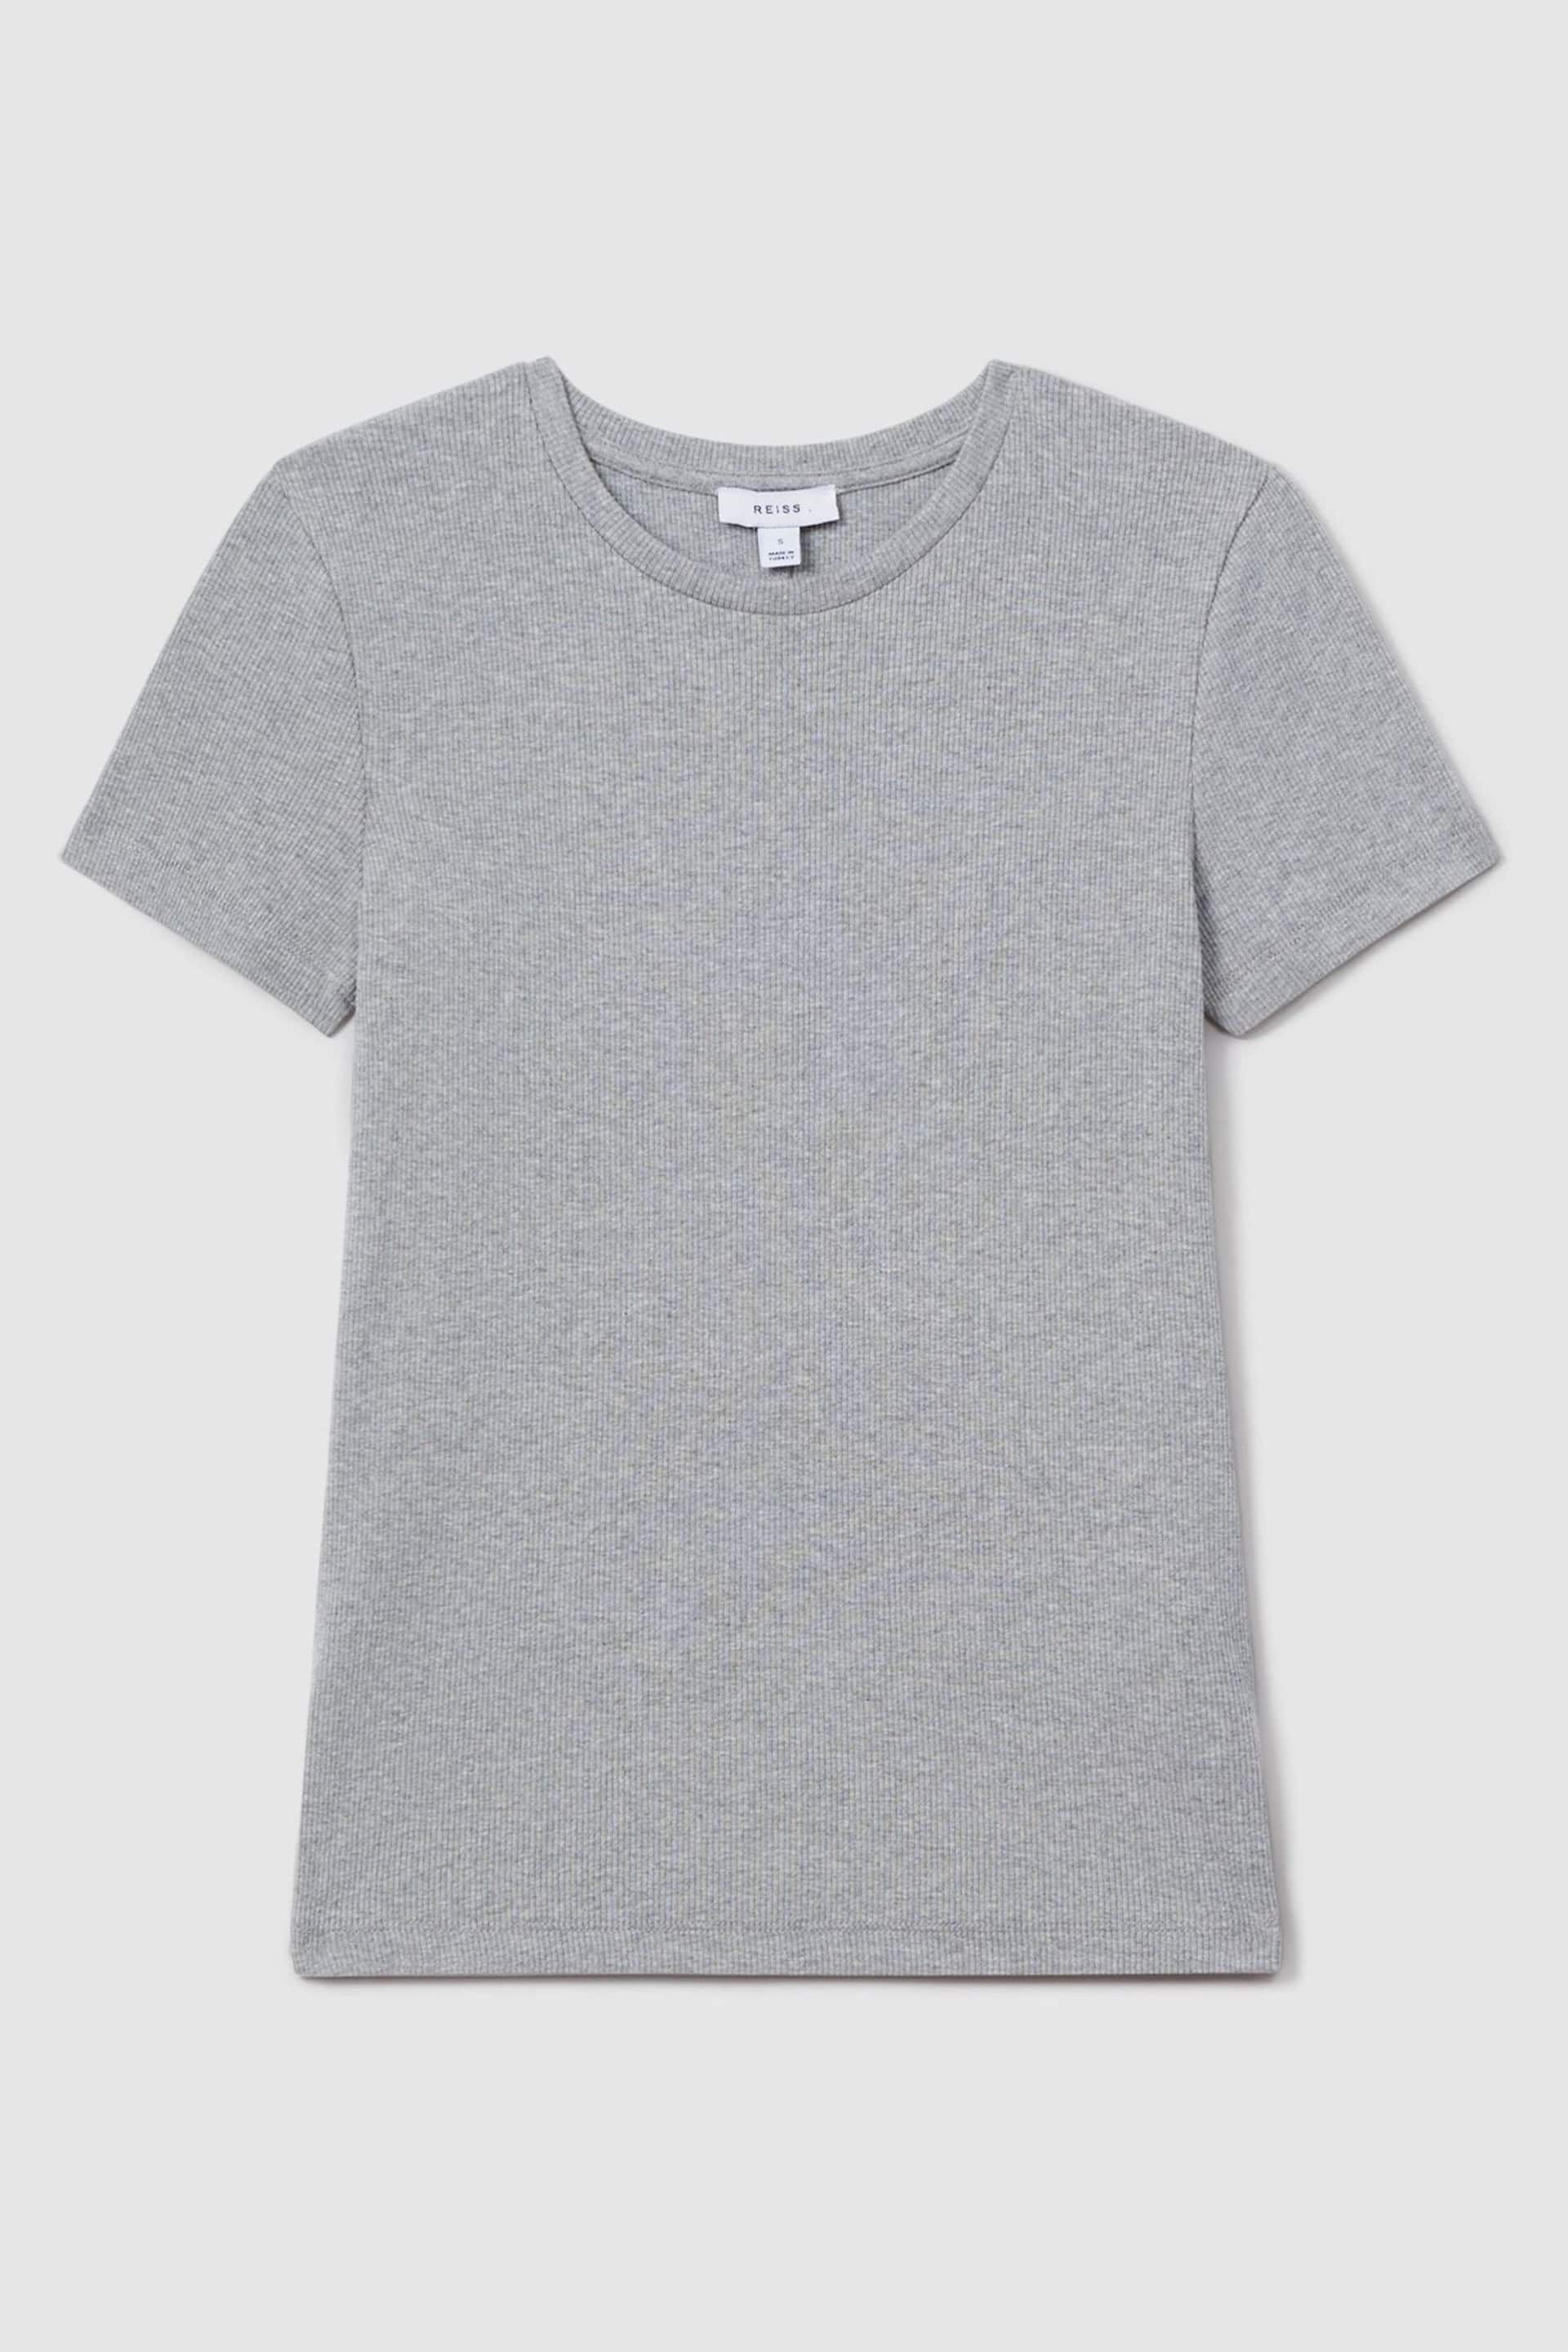 Reiss Grey Marl Victoria Cotton Blend Scoop Neck T-Shirt - Image 2 of 5